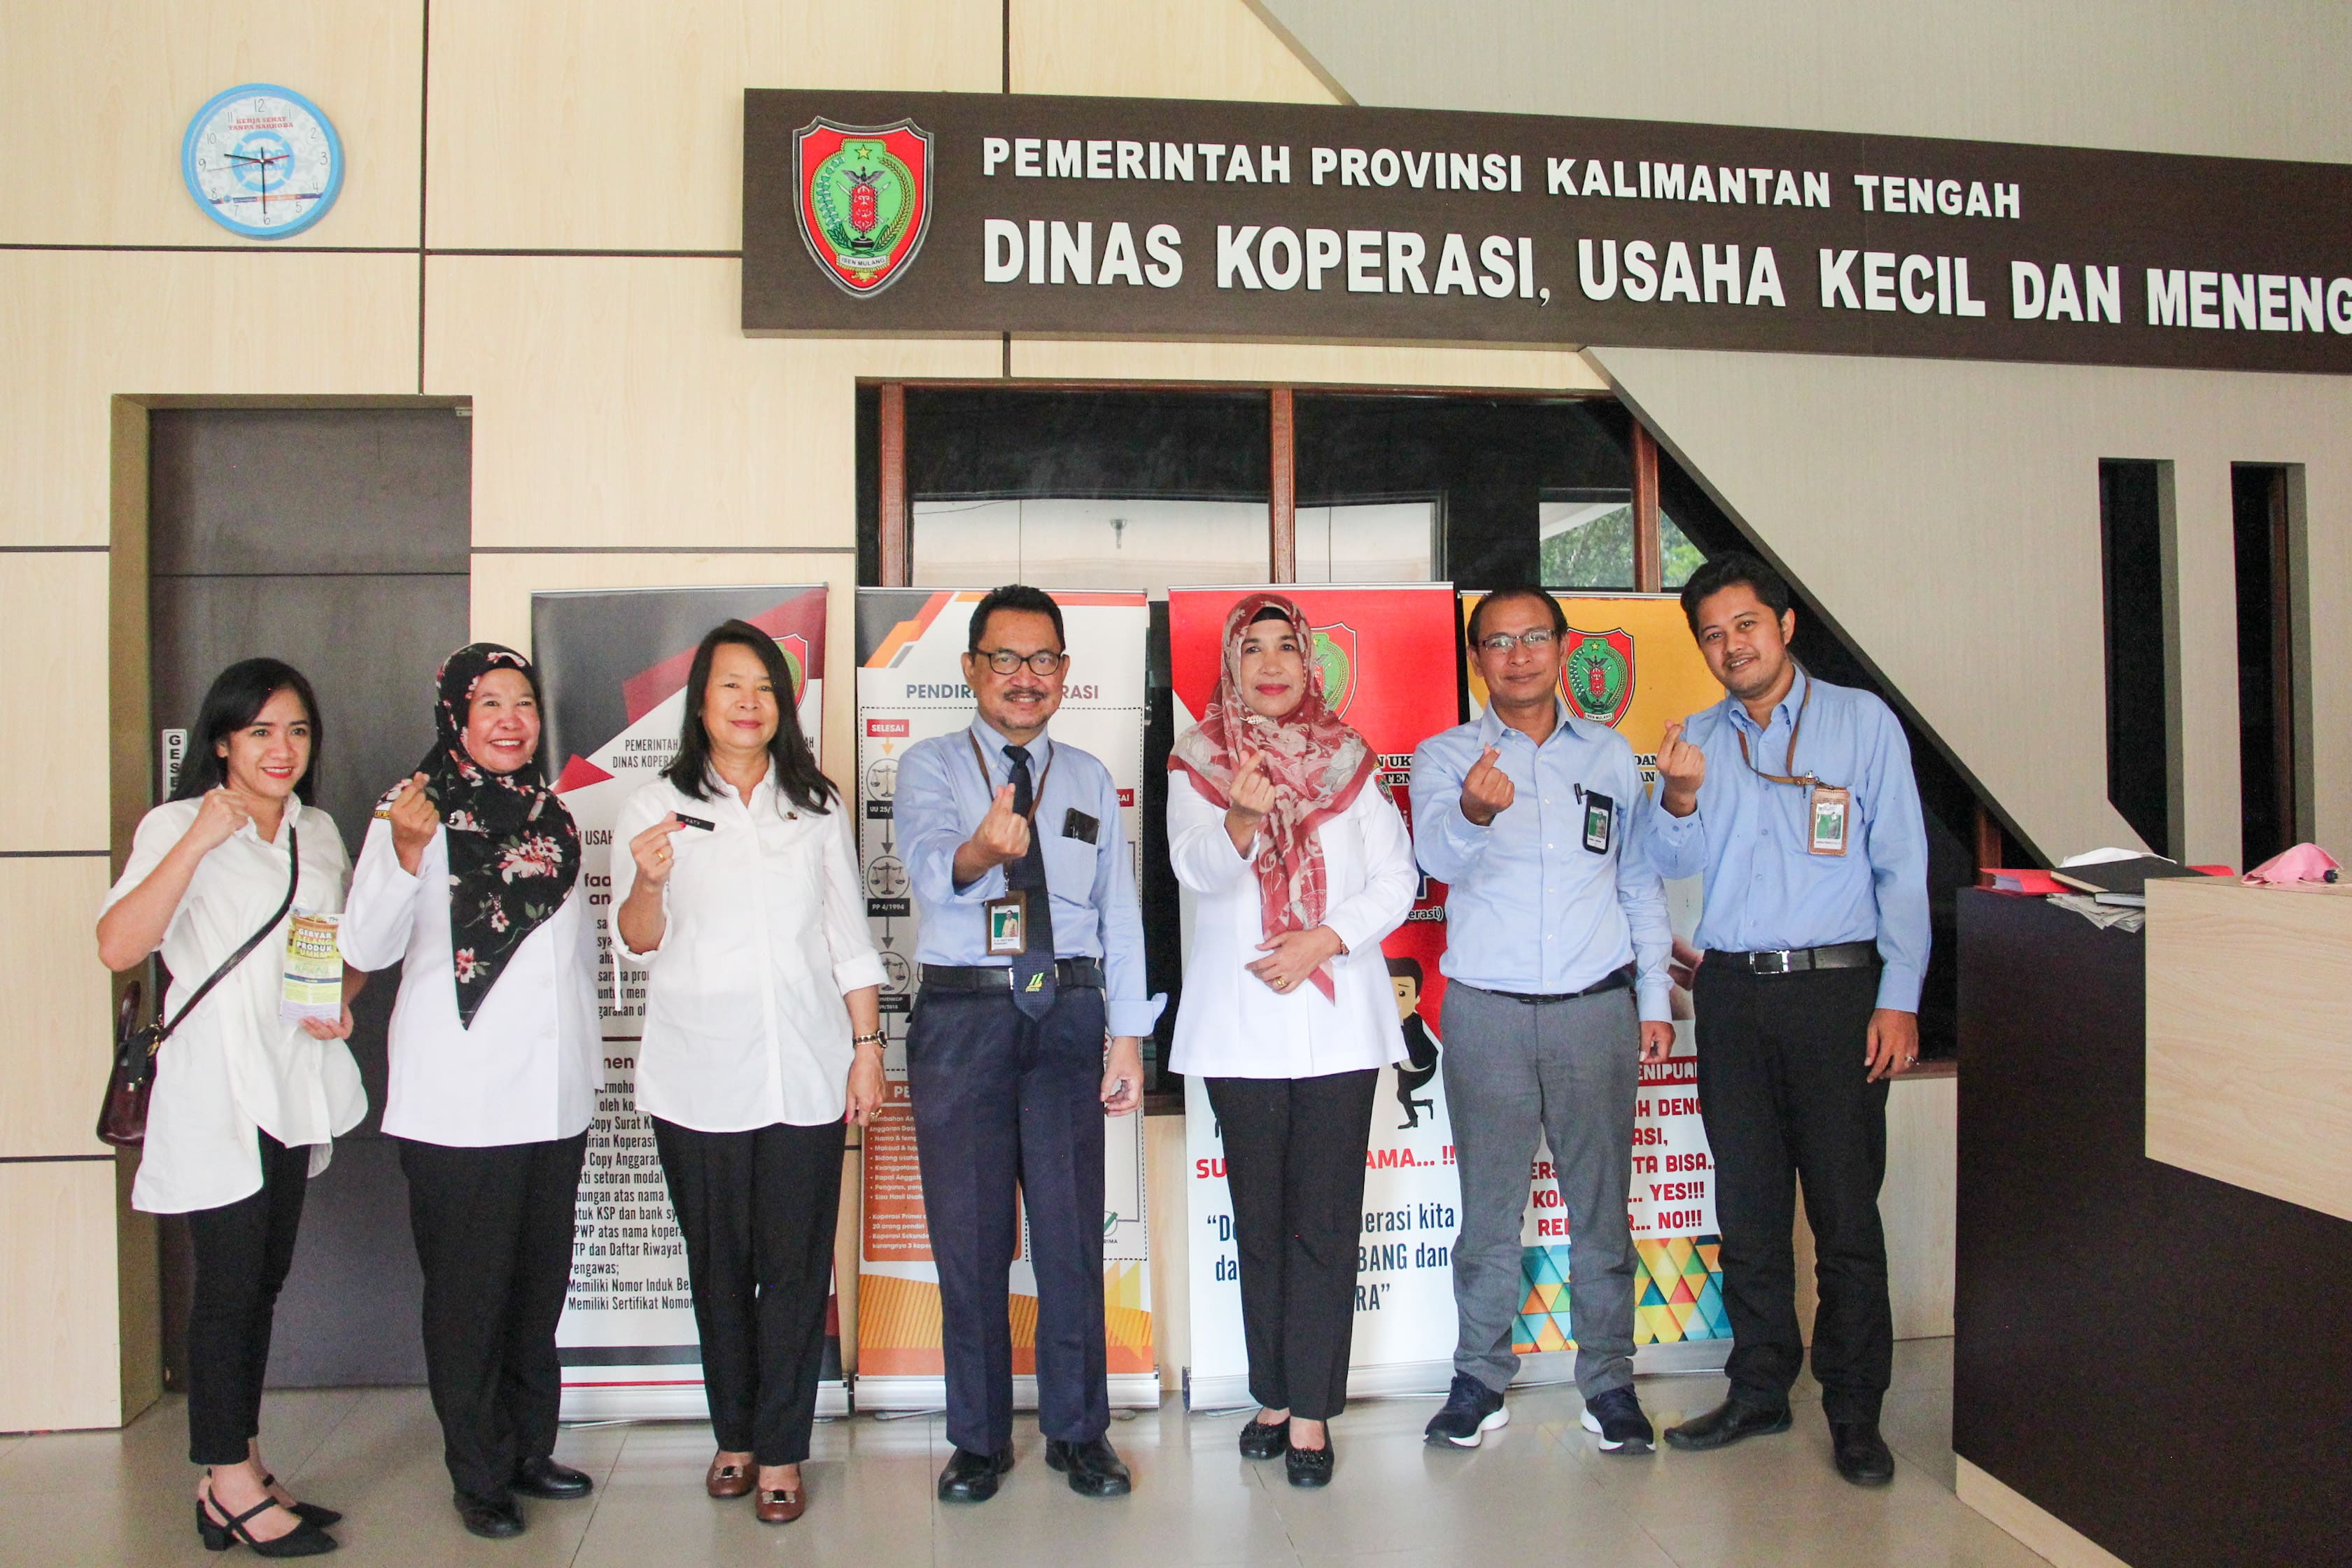 Menjaring UMKM Provinsi Kalimantan Tengah, Koordinasi dengan Dinas Koperasi, Usaha Kecil dan Menengah Provinsi Kalimantan Tengah